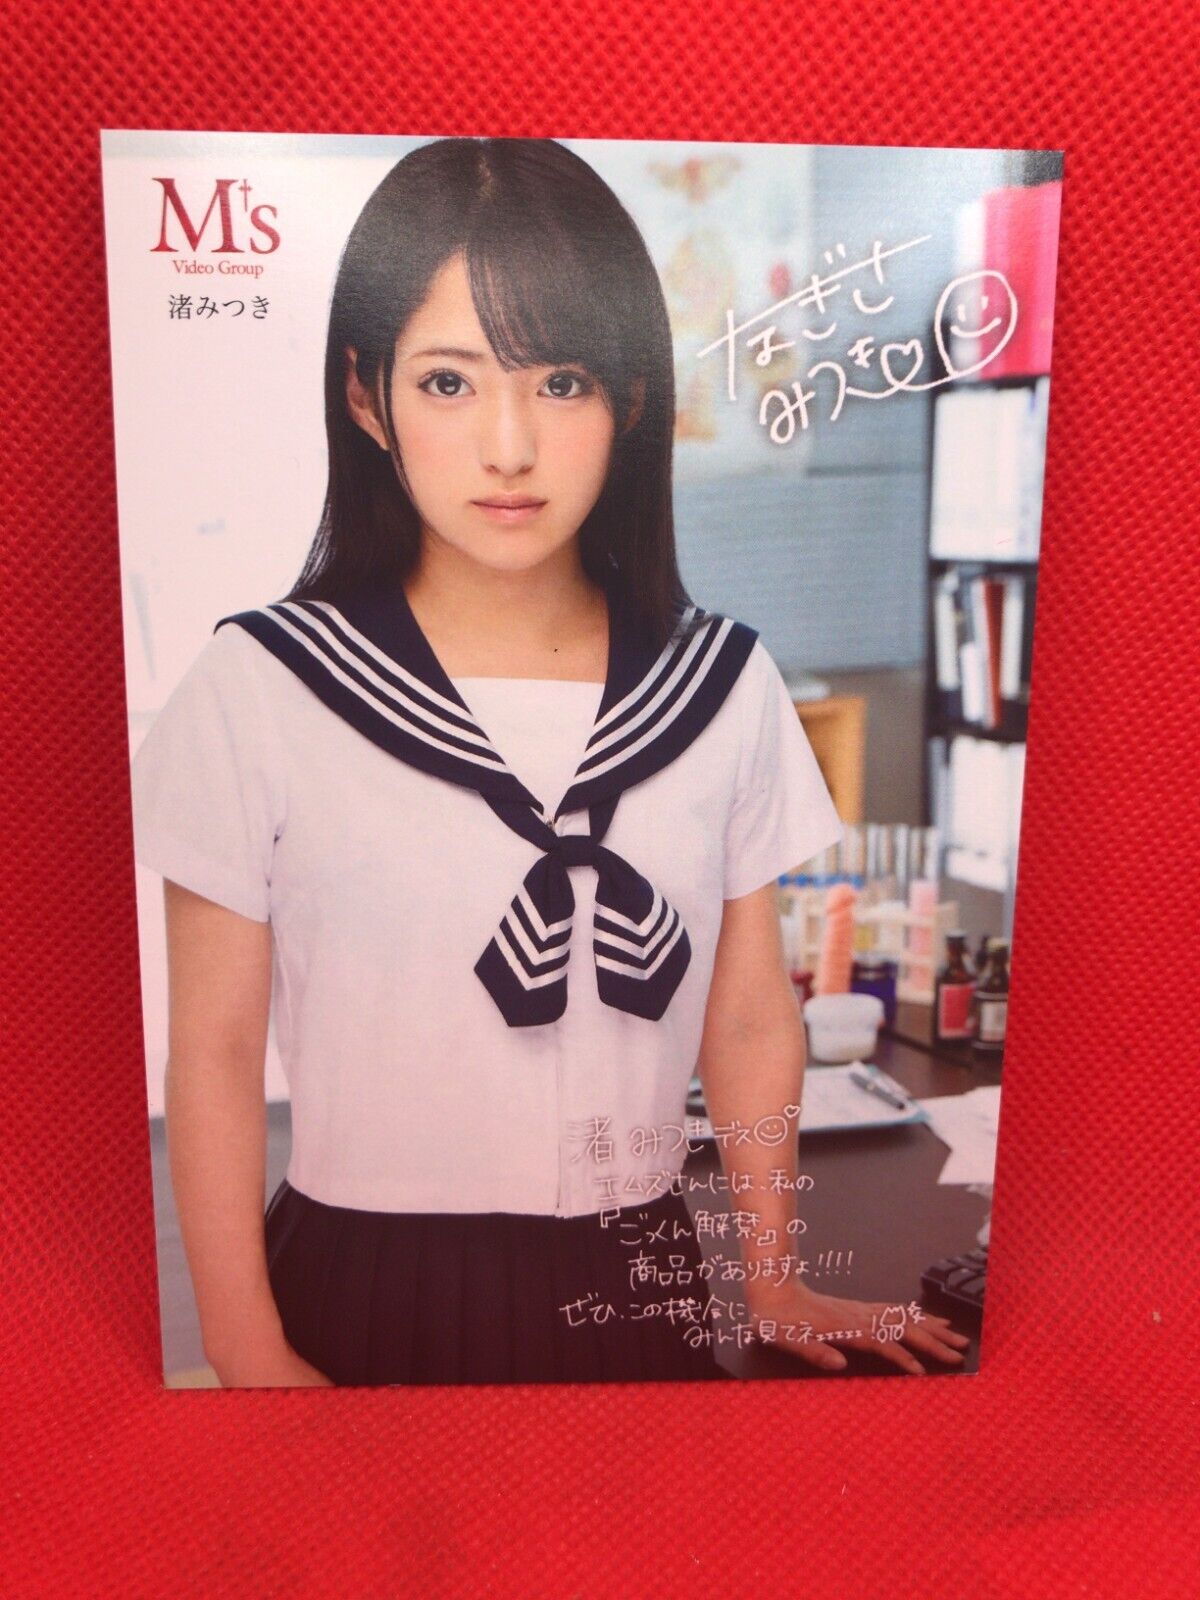 Mitsuki Nagisa post card film actor 5inch Japan printed Autograph M's